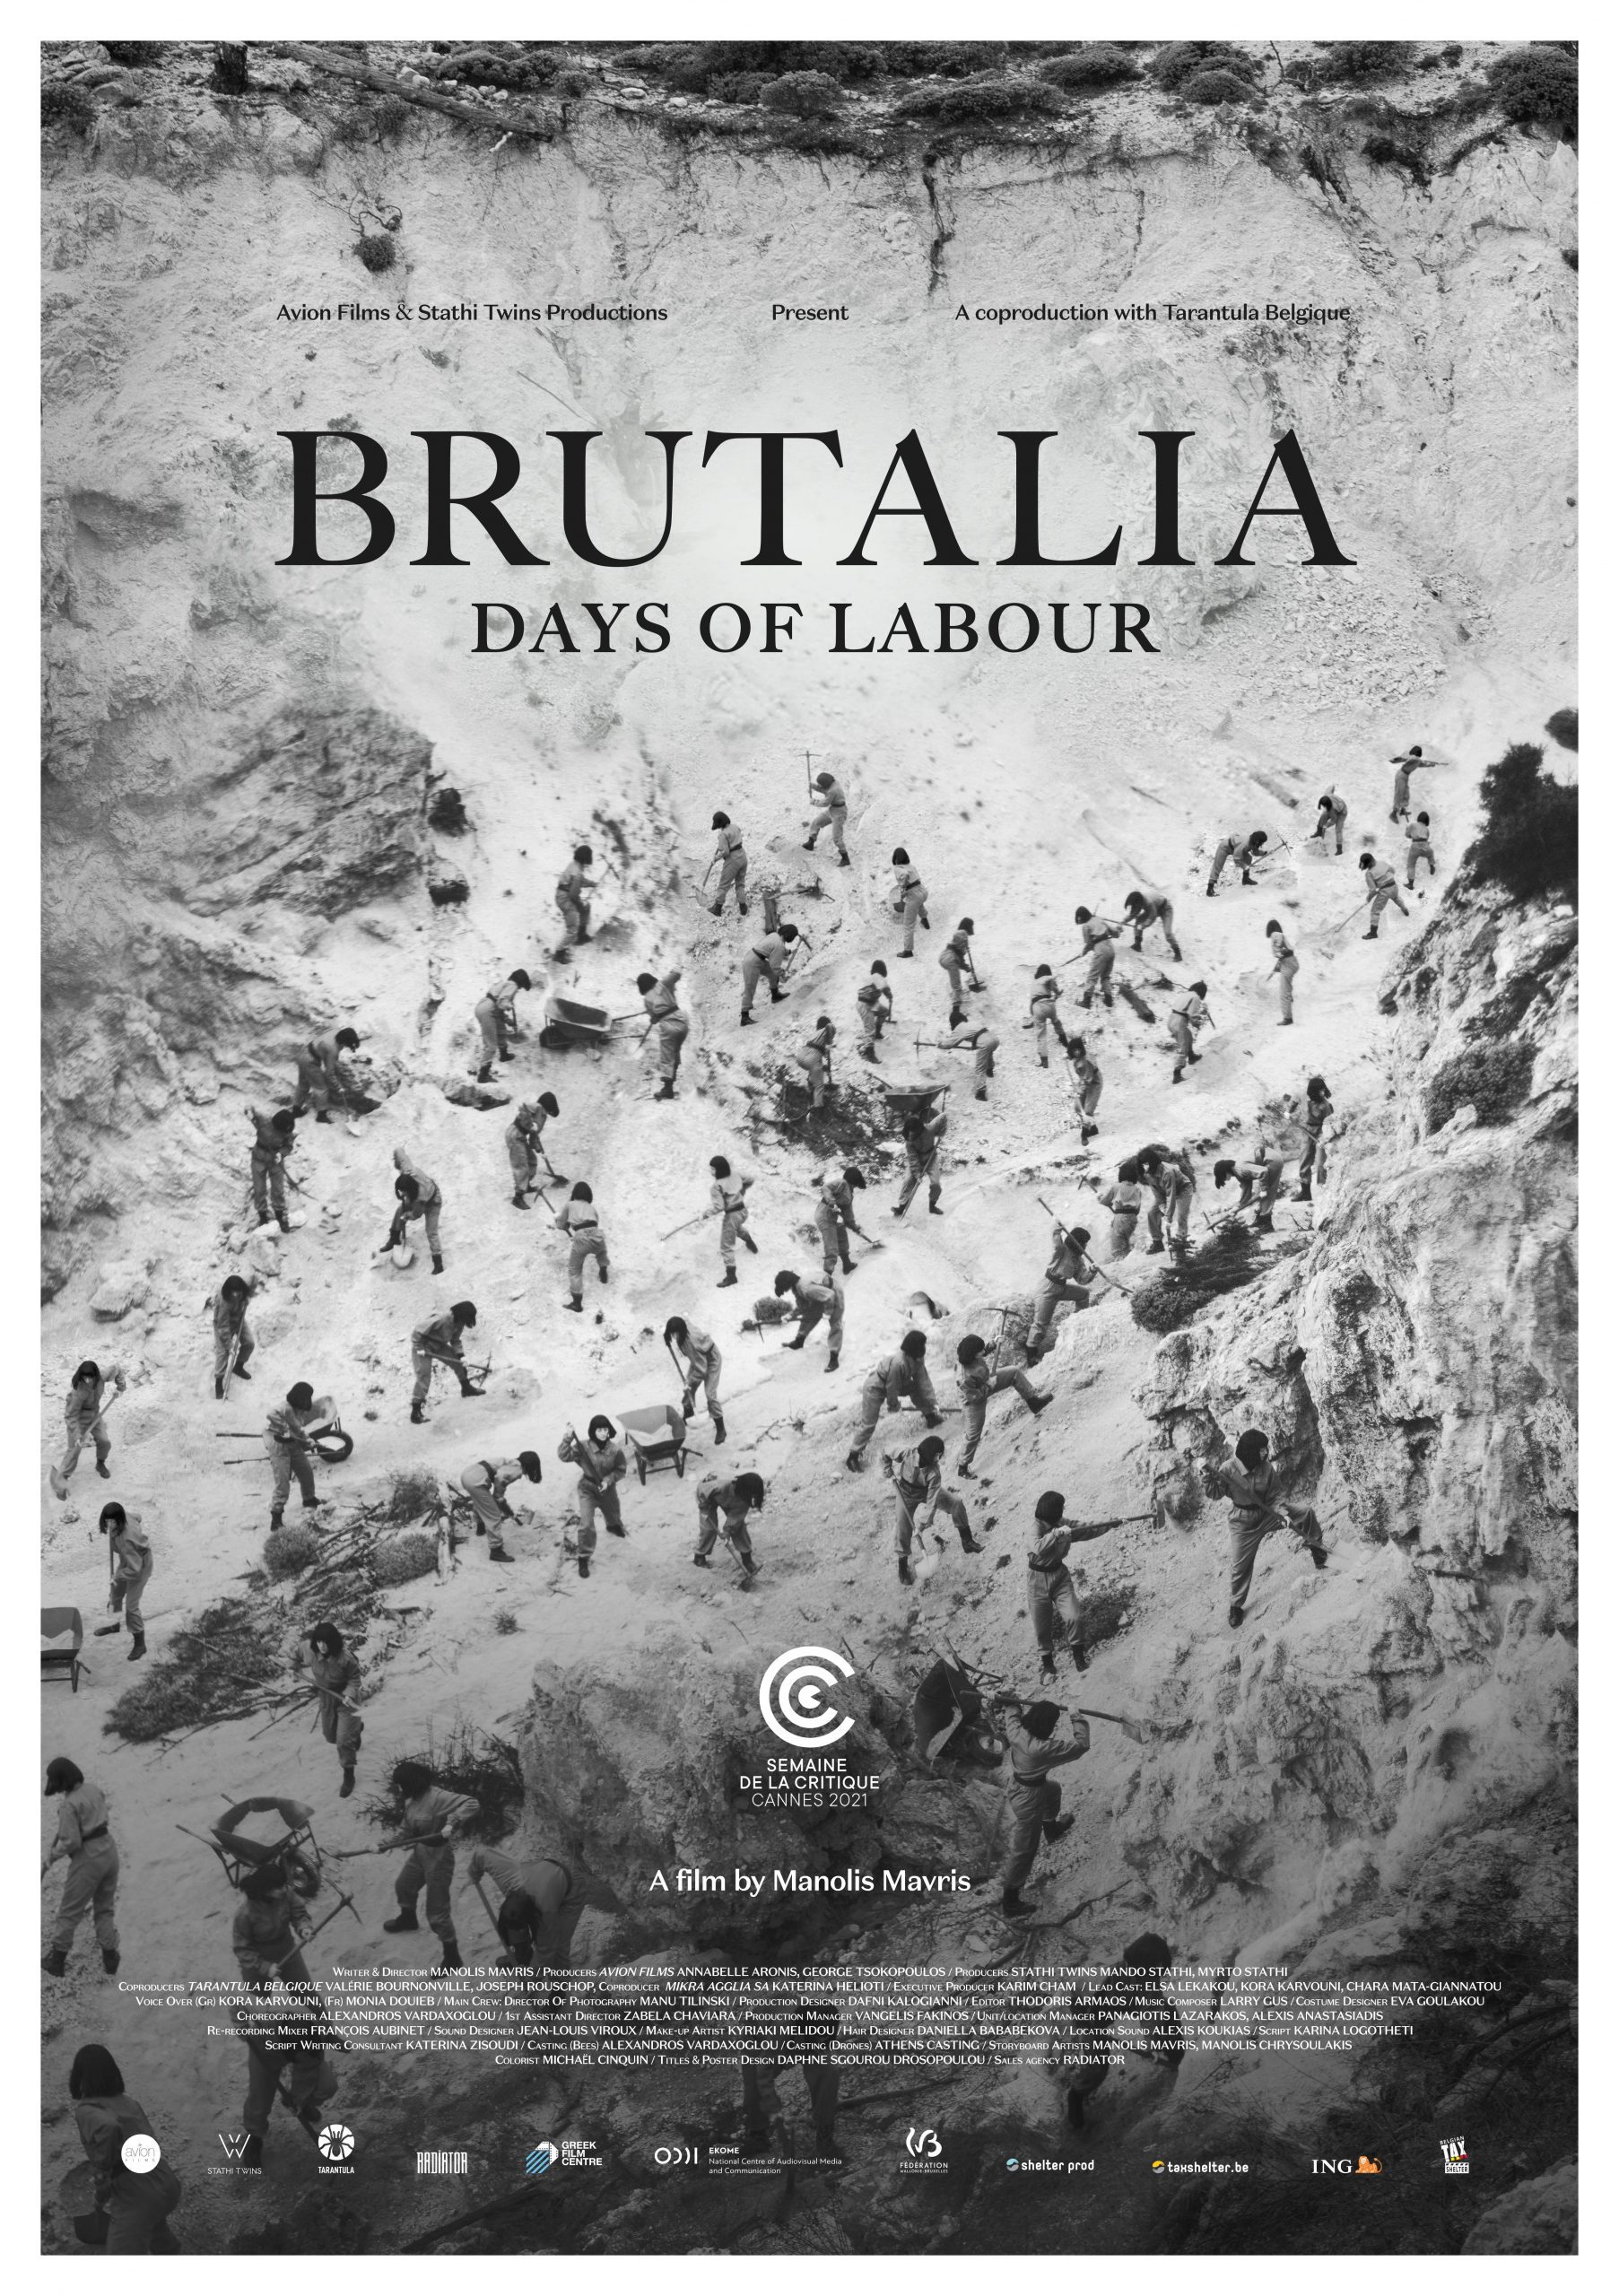 RIS 0125 Brutalia days of labour Poster 300dpi